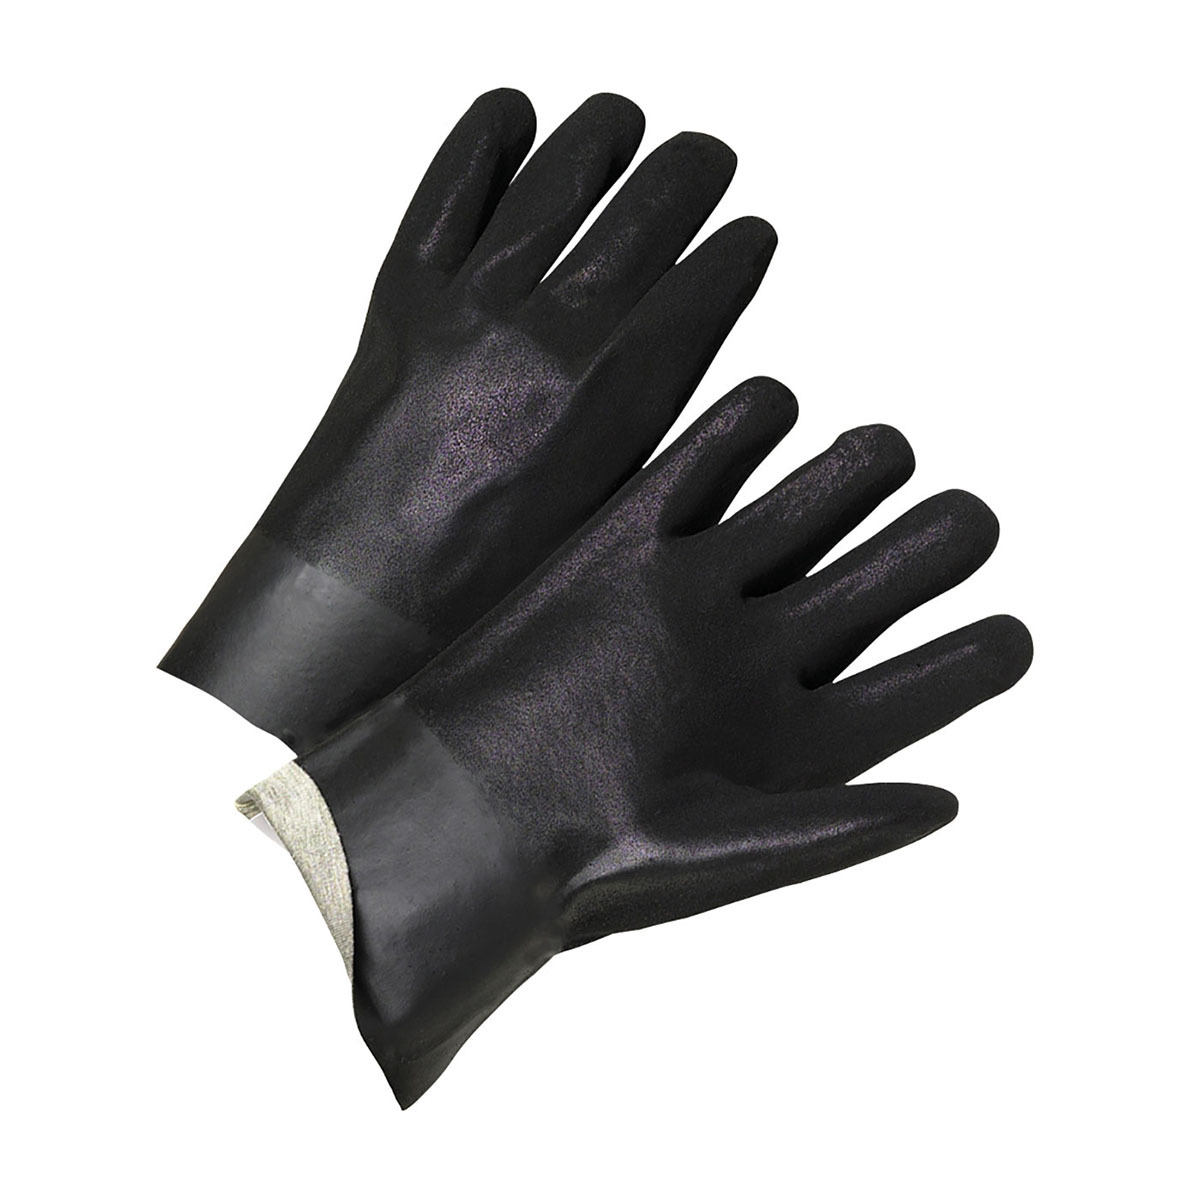 PIP® Chemical Resistant Gloves